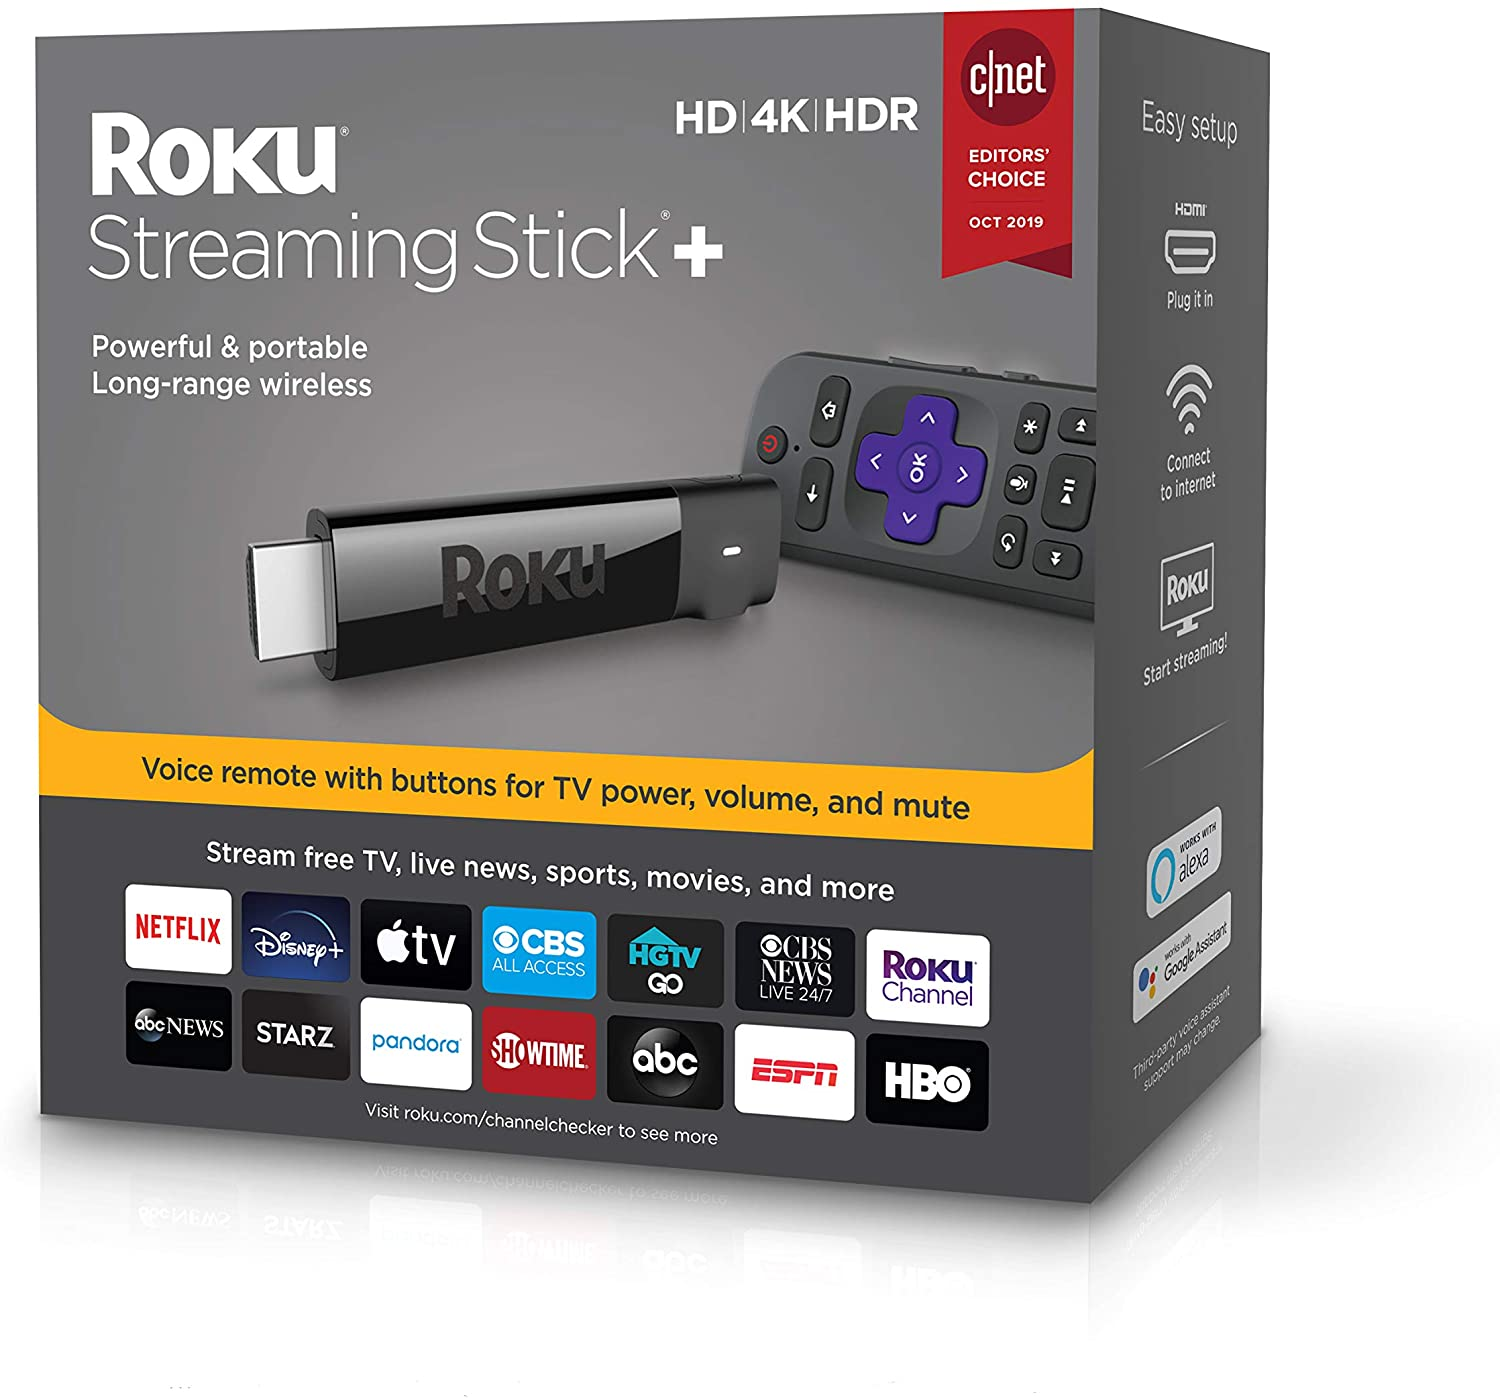 Roku Streaming Stick + packaging